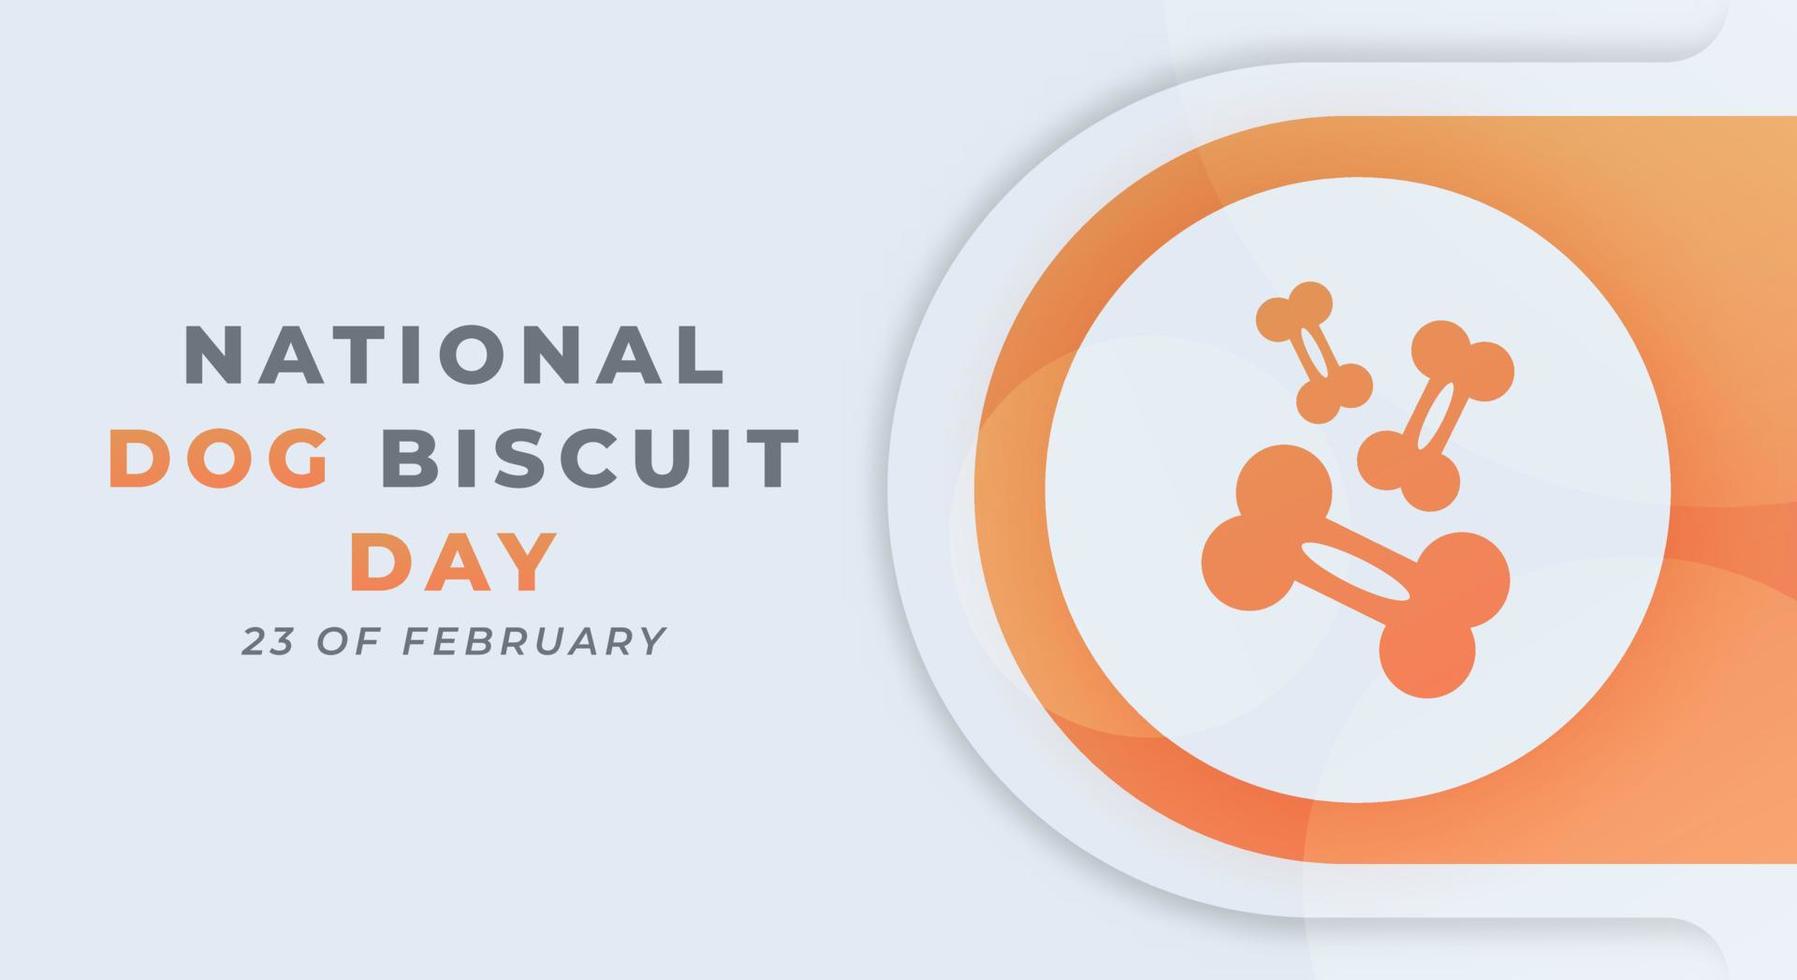 Happy National Dog Biscuit Day February Celebration Vector Design Illustration. Template for Background, Poster, Banner, Advertising, Greeting Card or Print Design Element